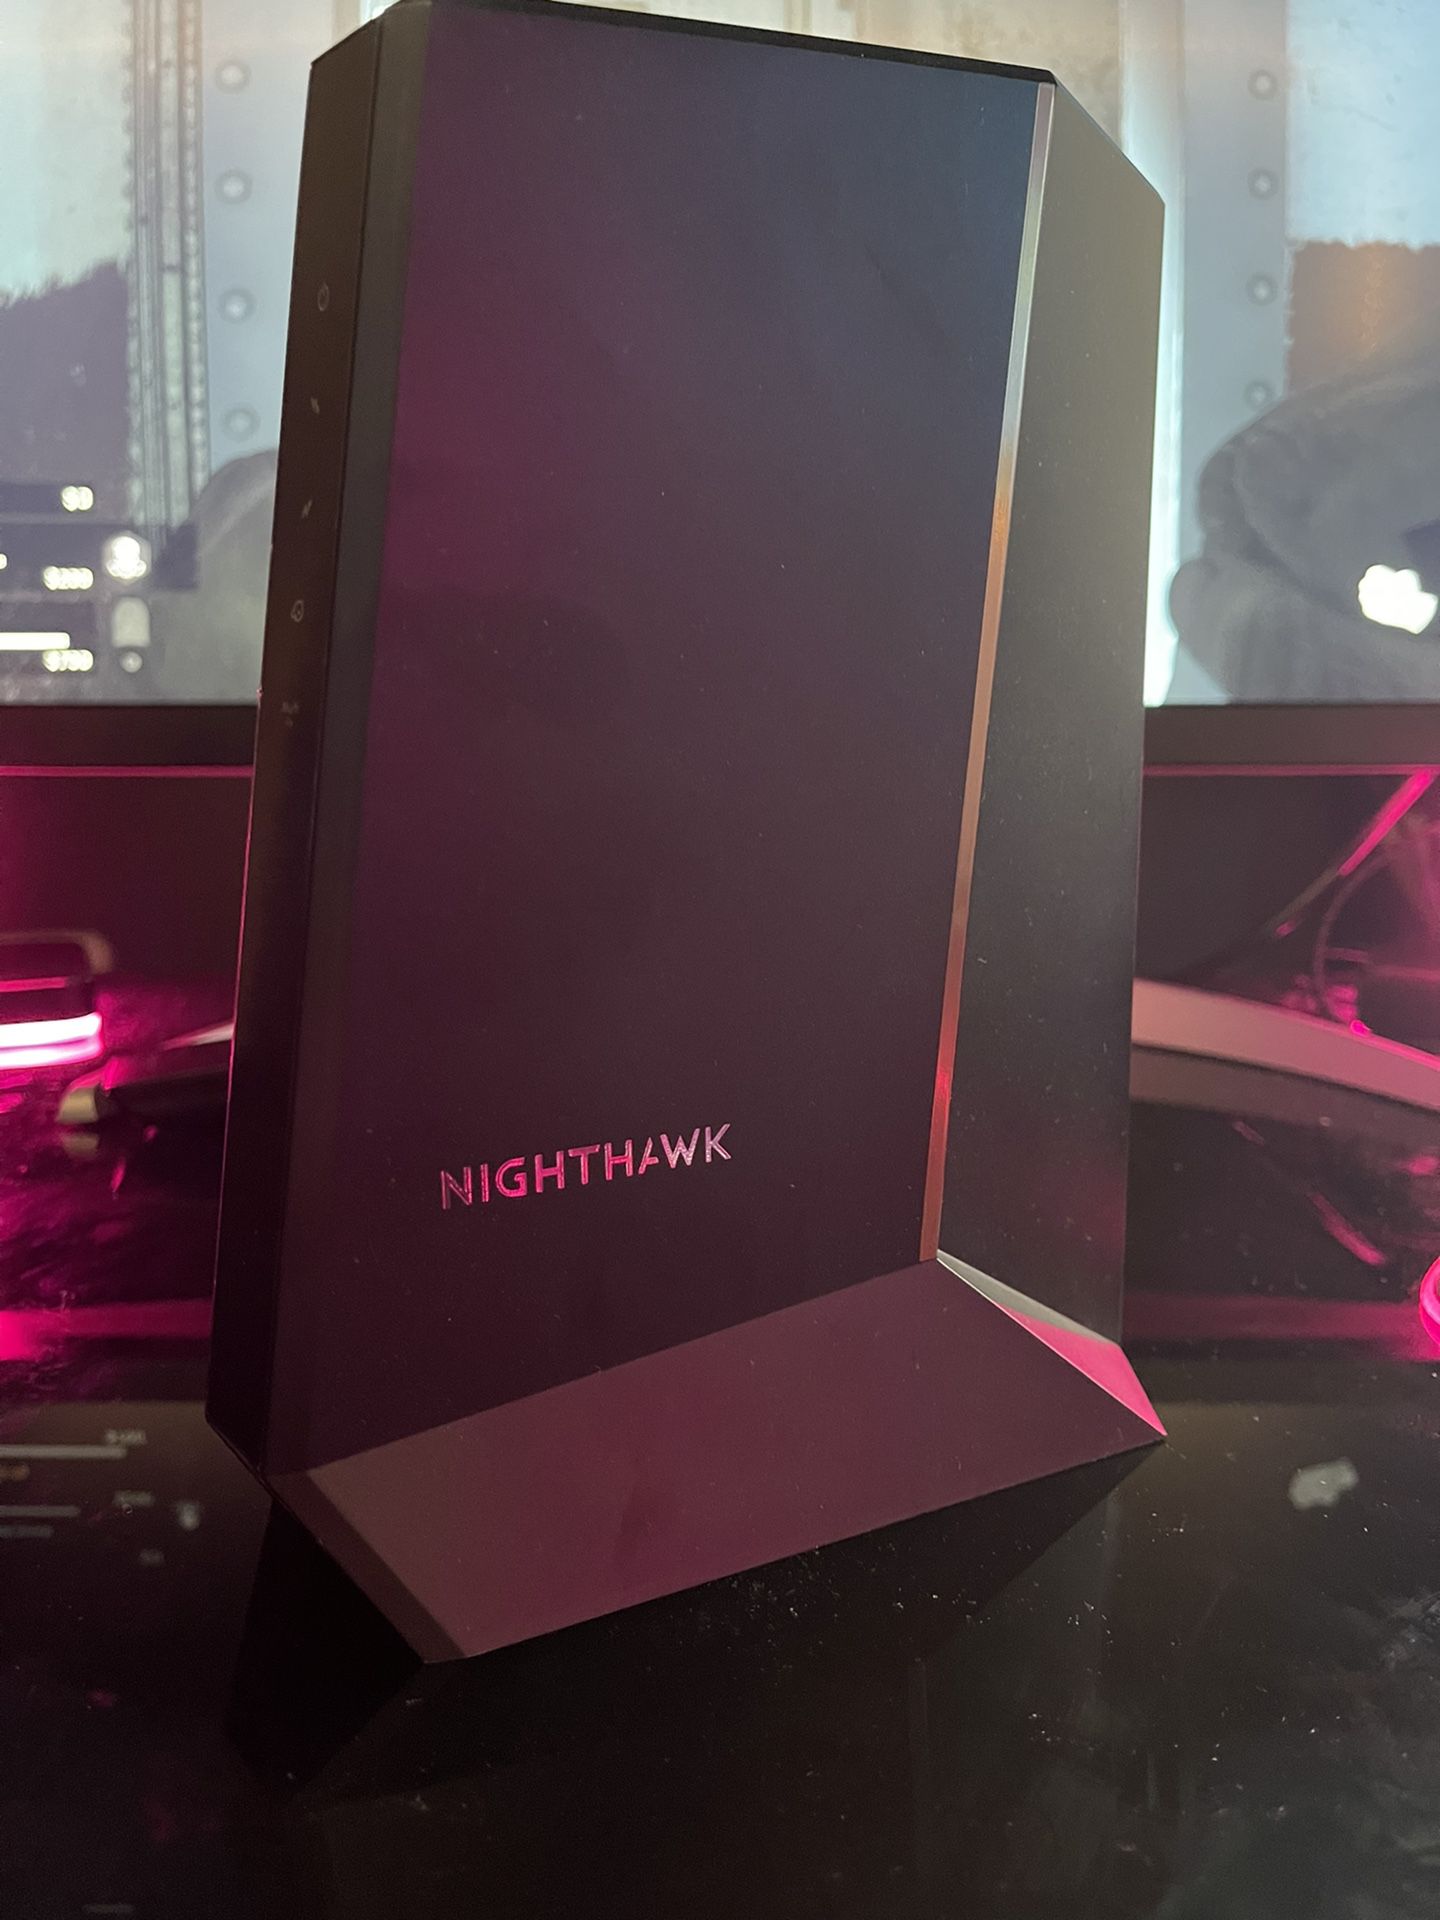 Nighthawk Multi-Gig 2.5Gbps Cable Modem